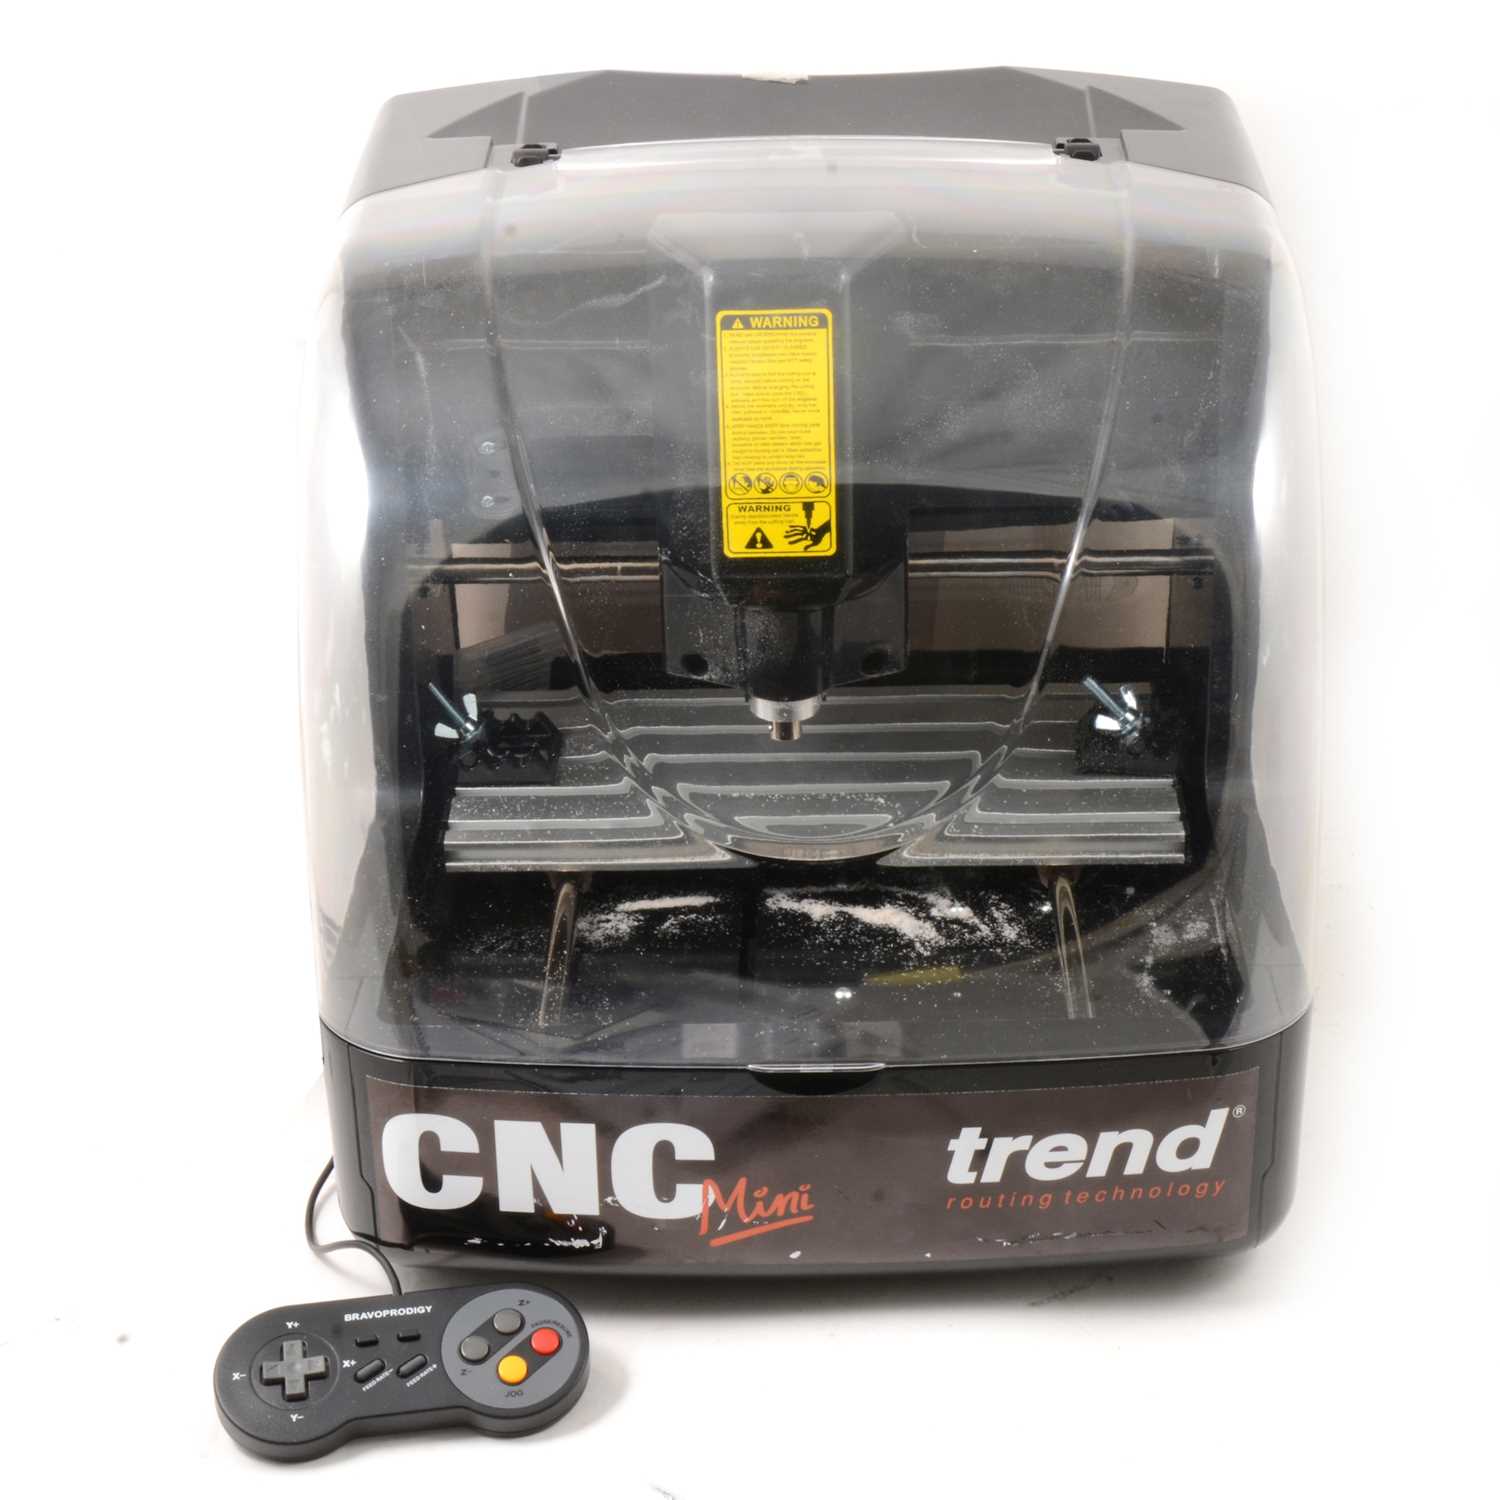 Lot 5 - A Trend CNC Mini router/engraving machine